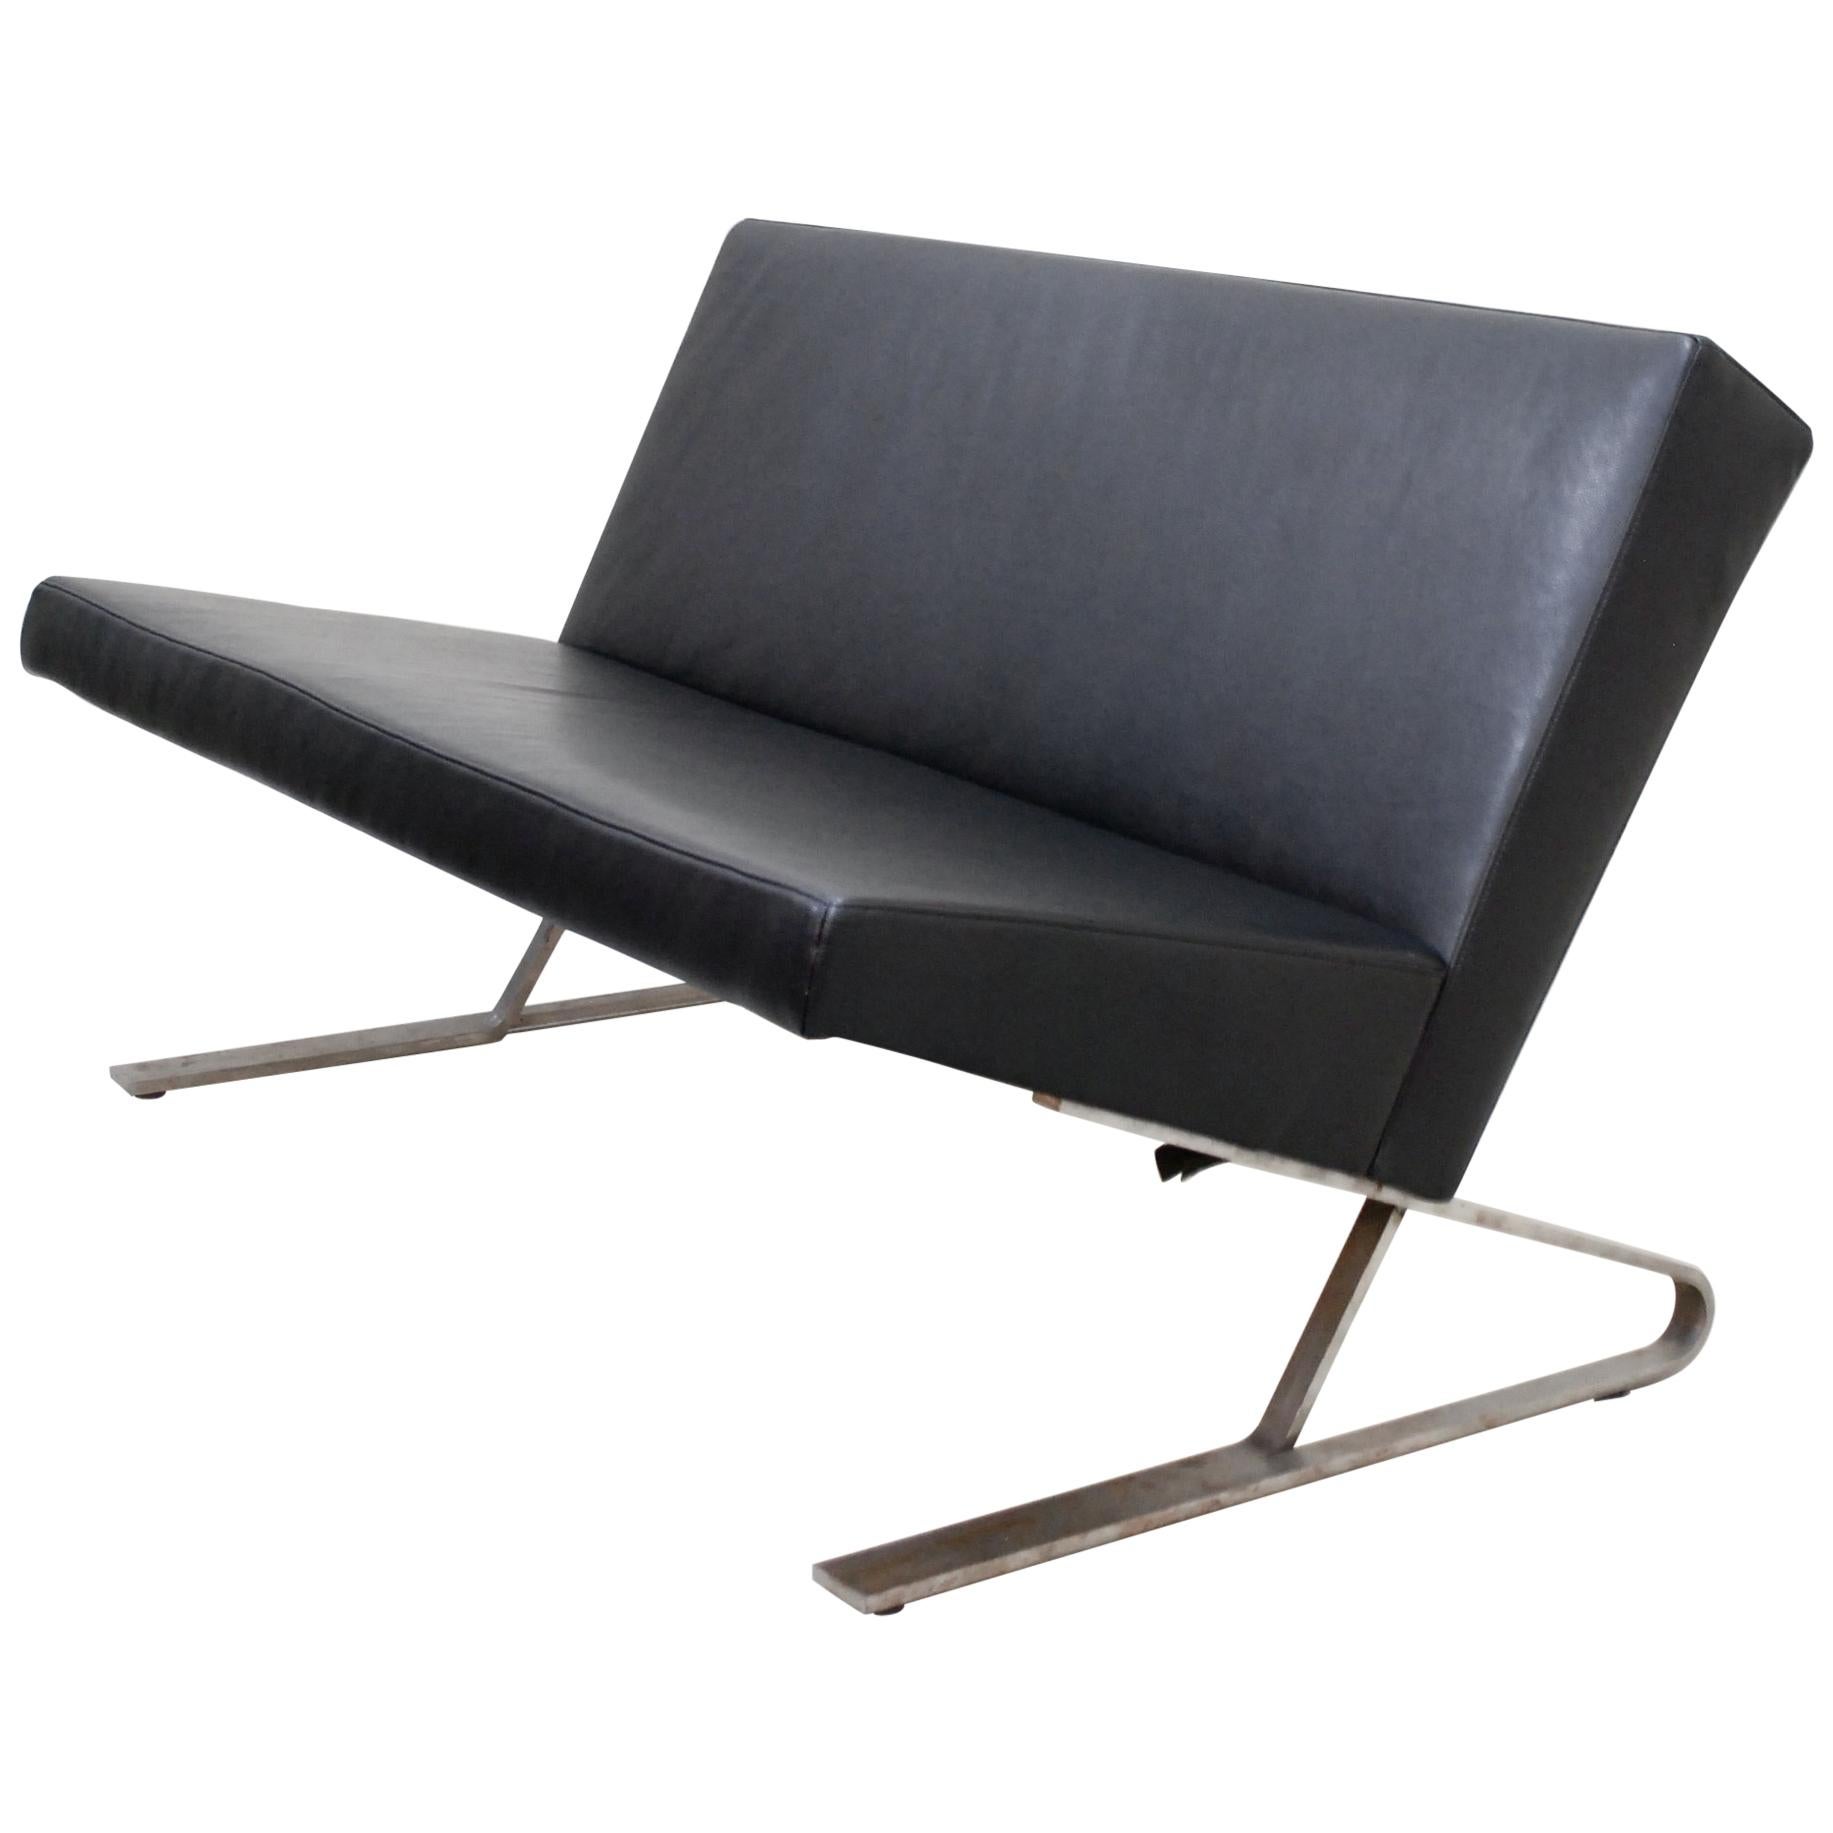  ClassiCon Model Satyr Sofa Design  by ForUse For Sale